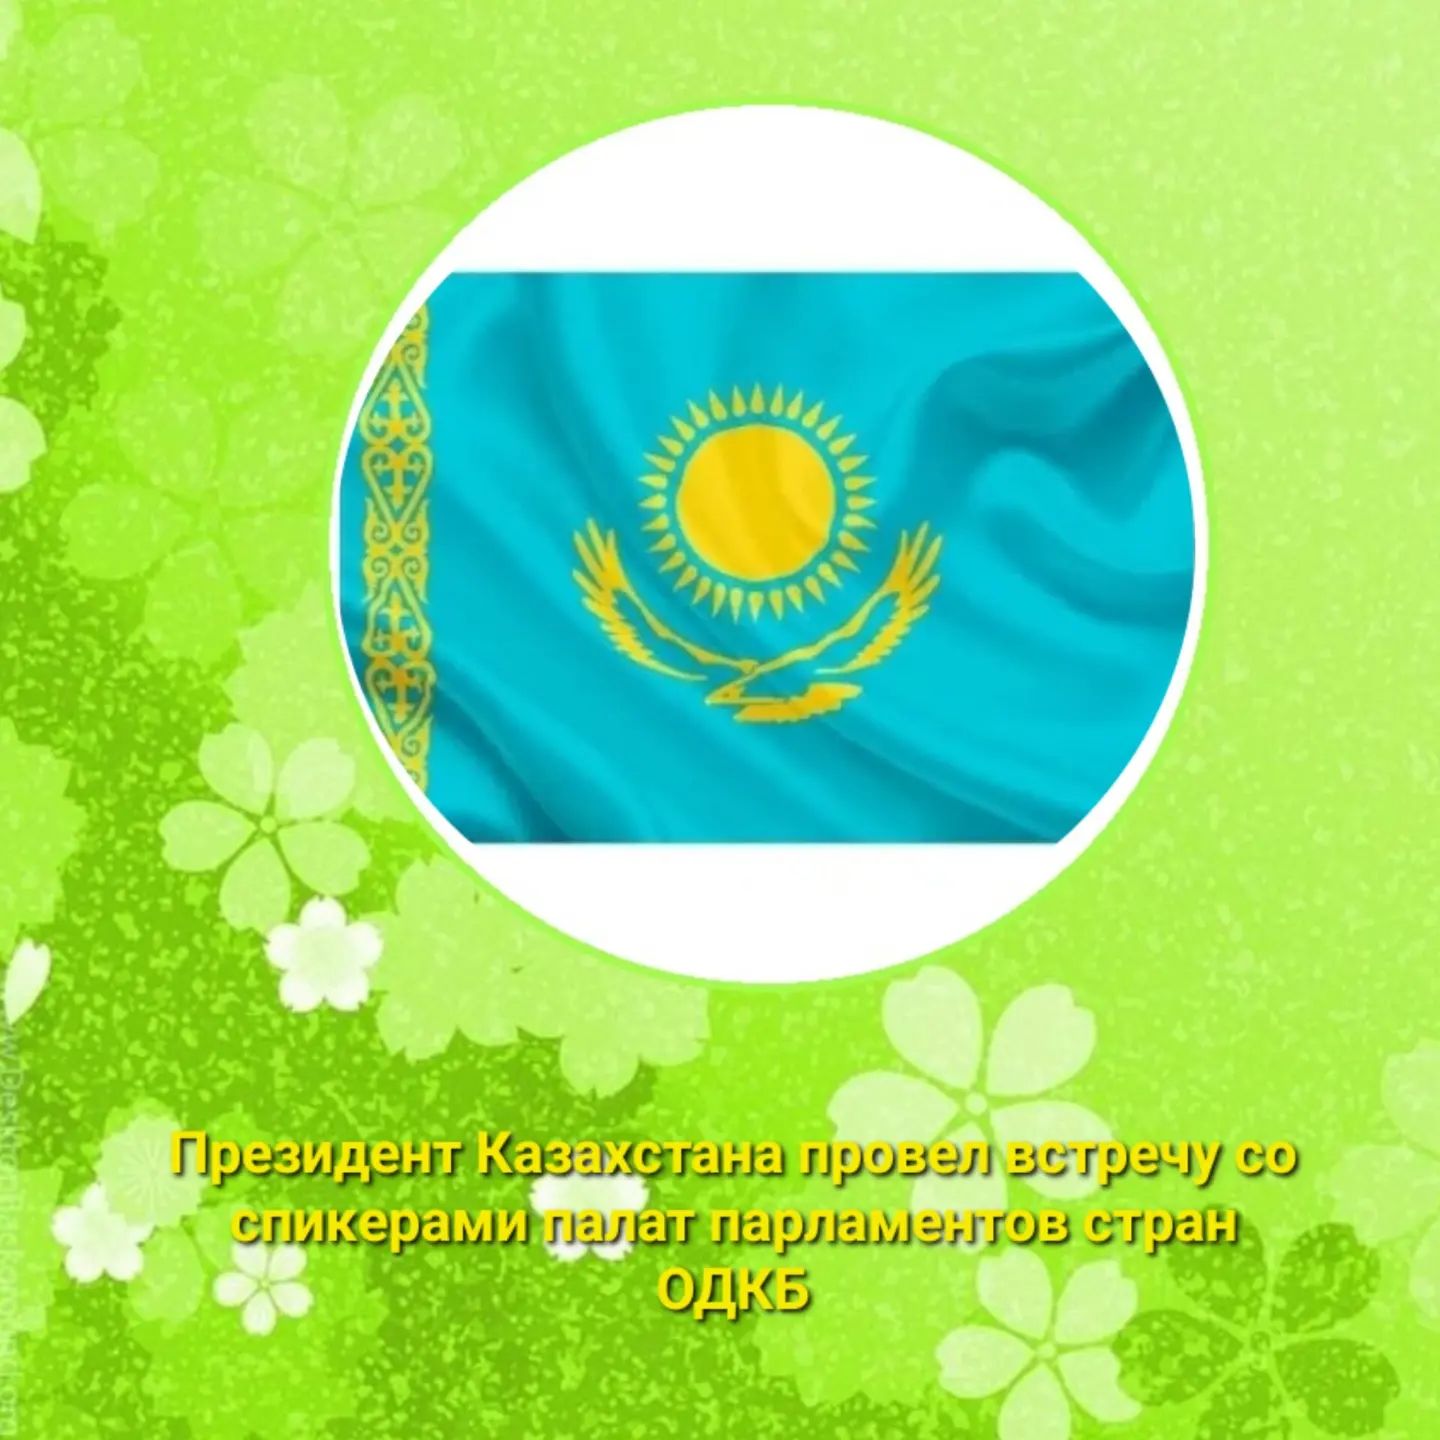 The president Казахстана провел встречу со спикерами палат парламентов стран ОДКБ.